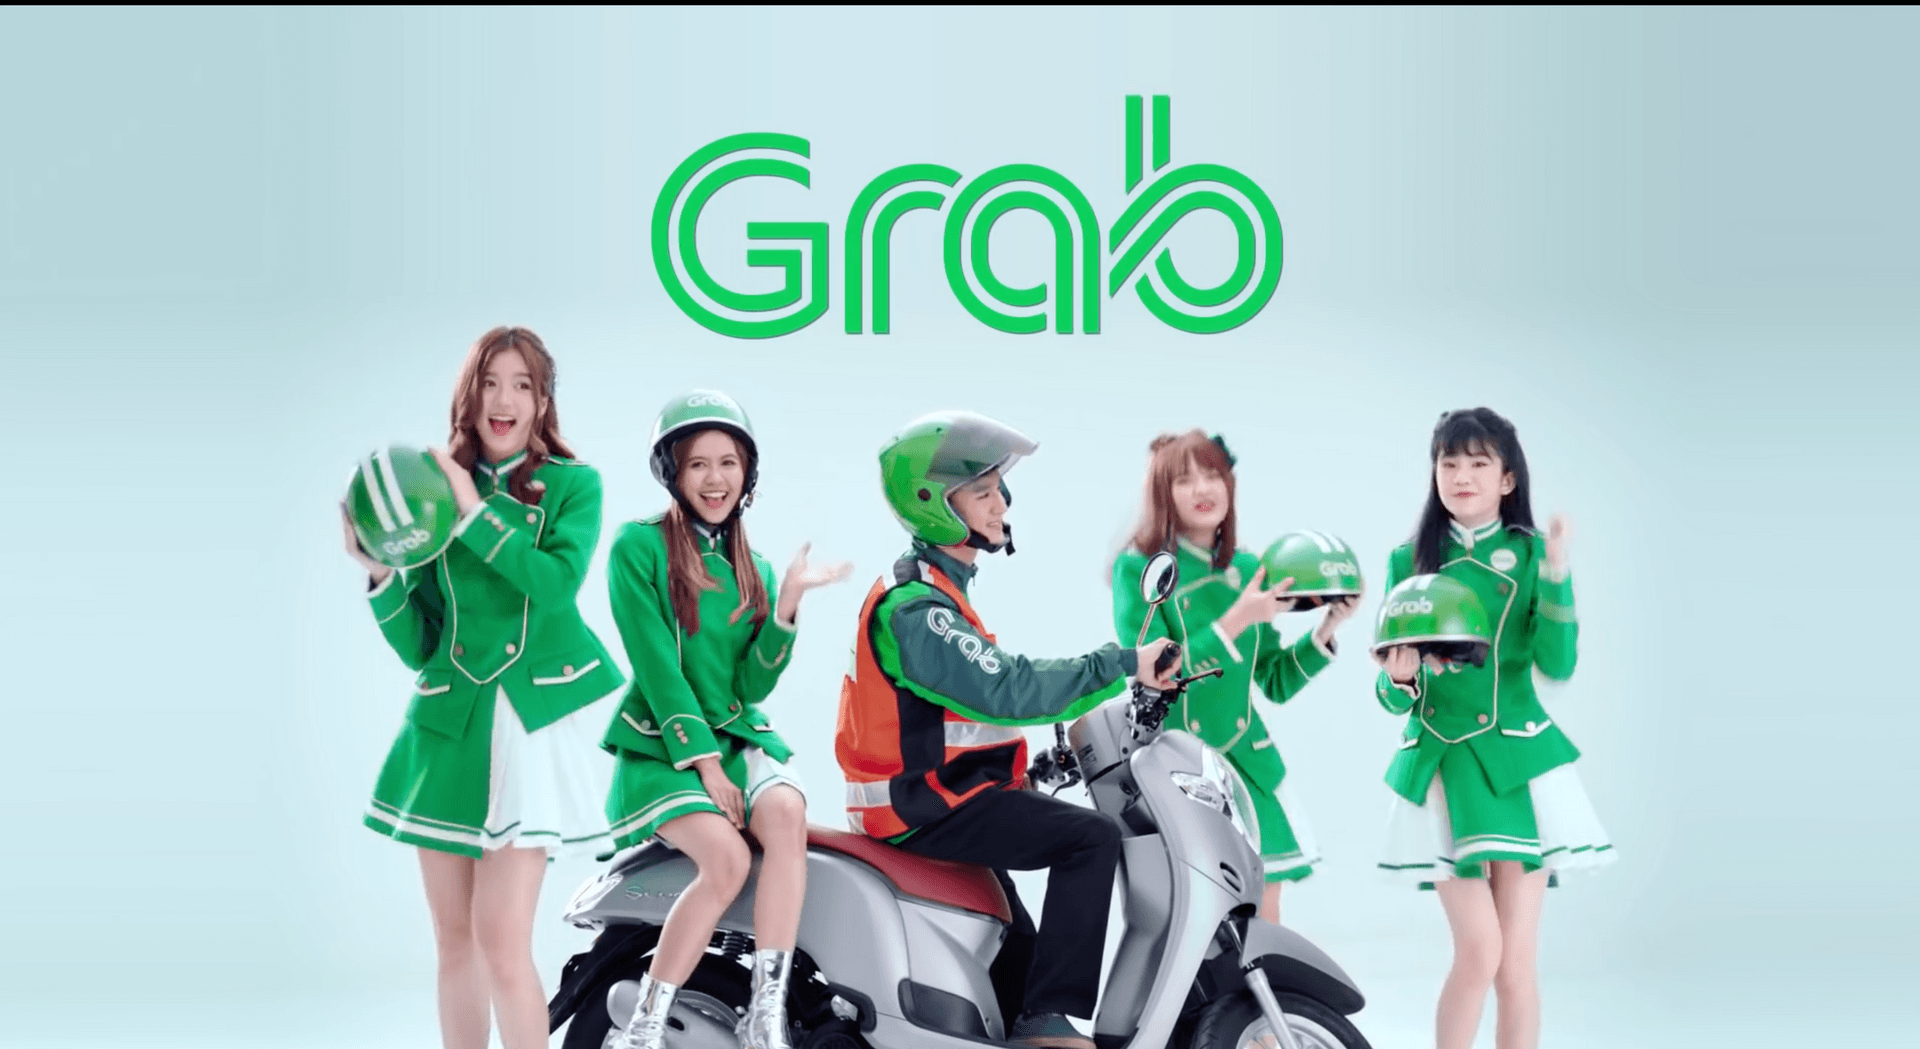 A popular girl band poses near a Grab driver wearing green uniform